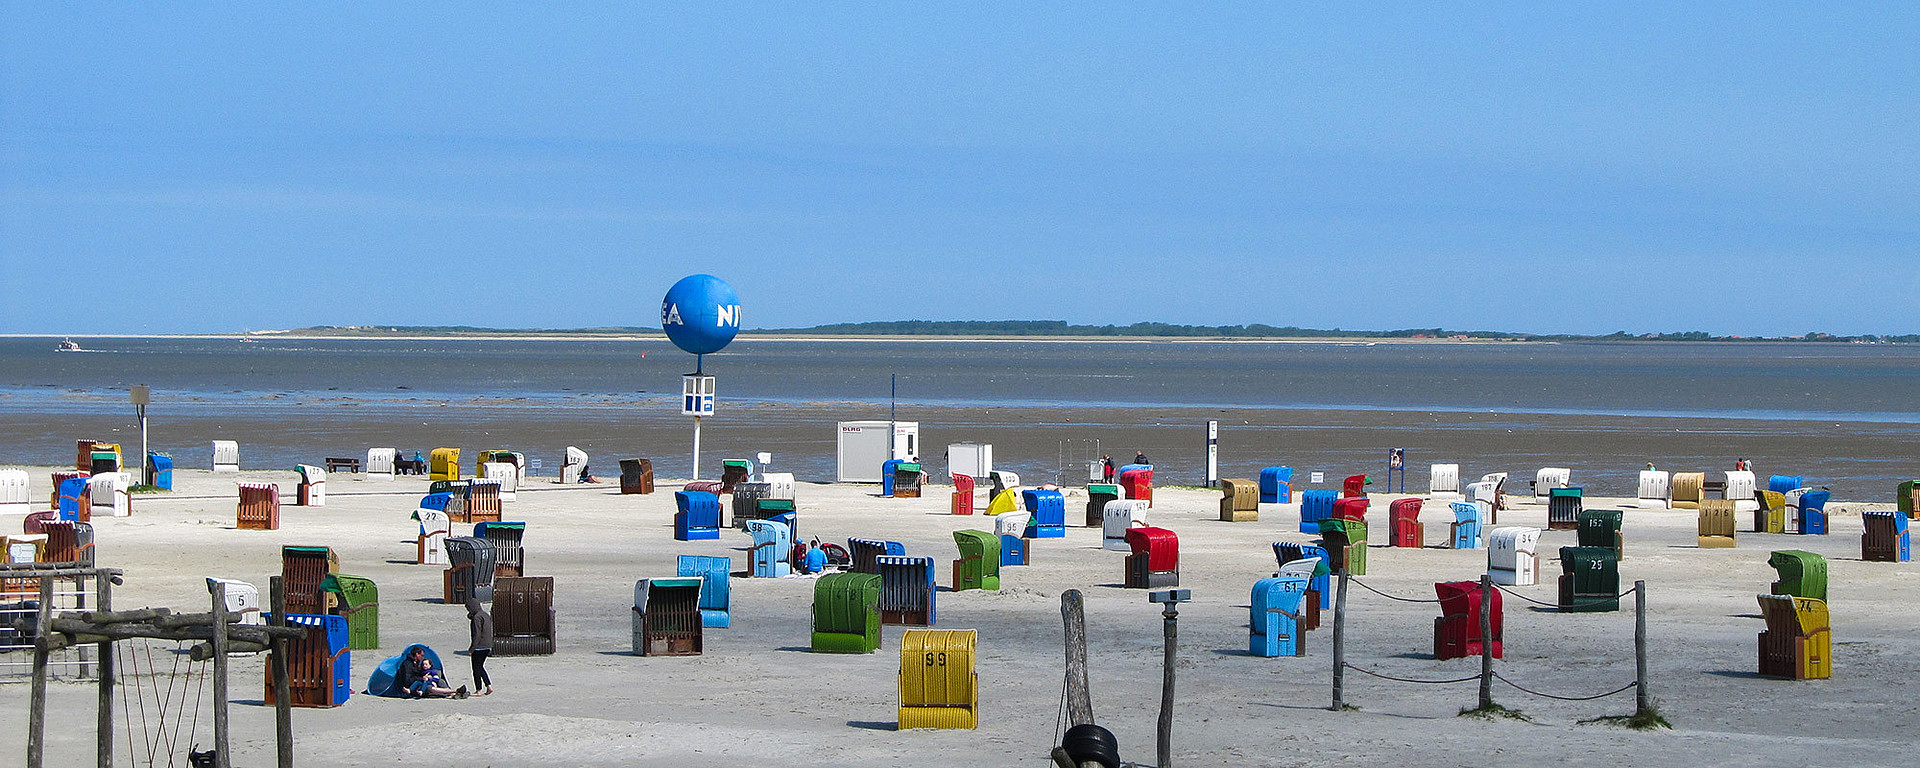 Strandkörber auf Strand auf Dornum